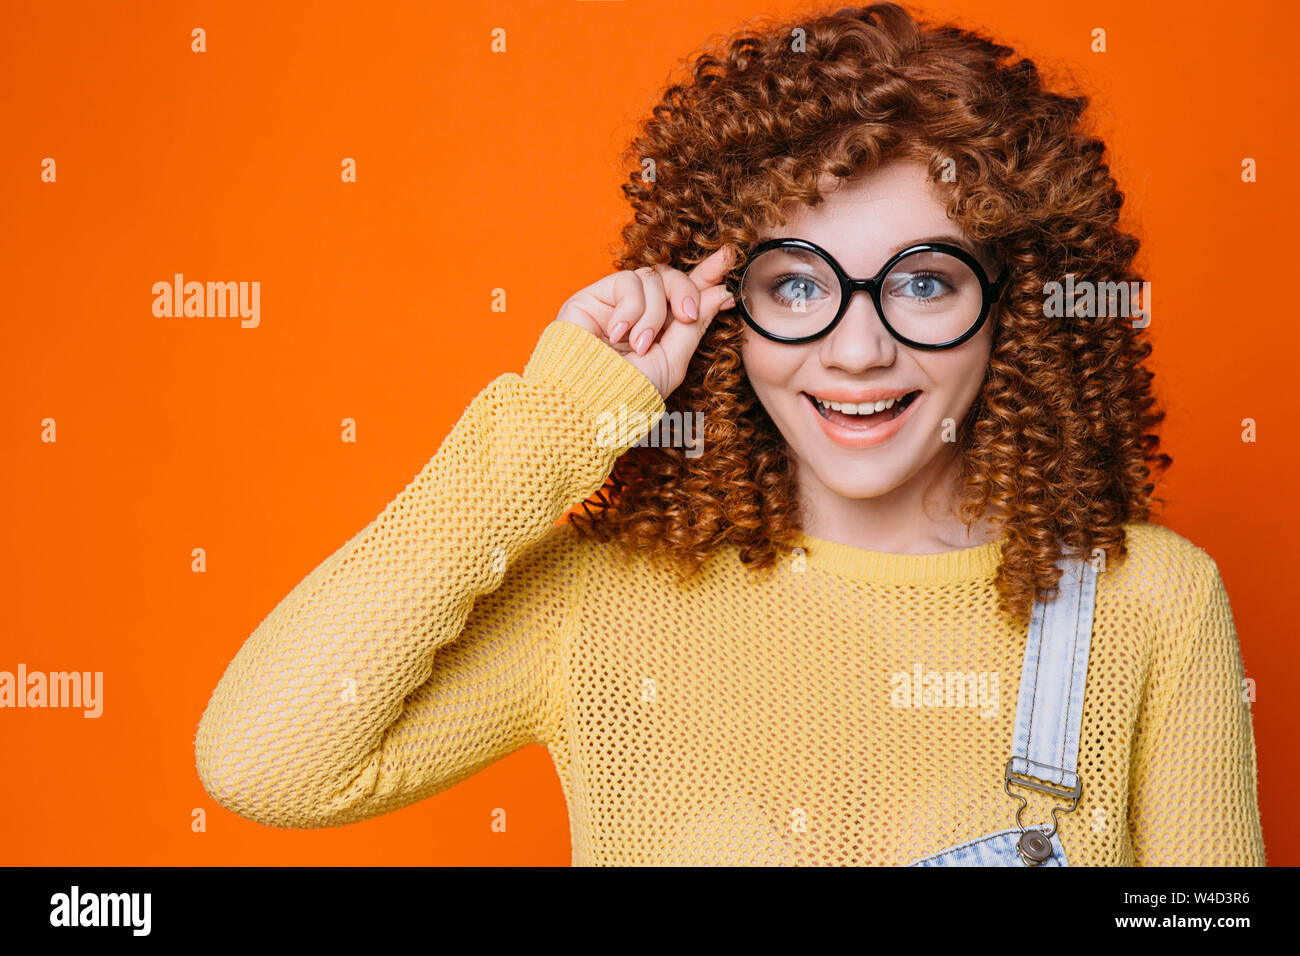 Smiling happy Student woman adjusting her eyeglasses Stock Photo